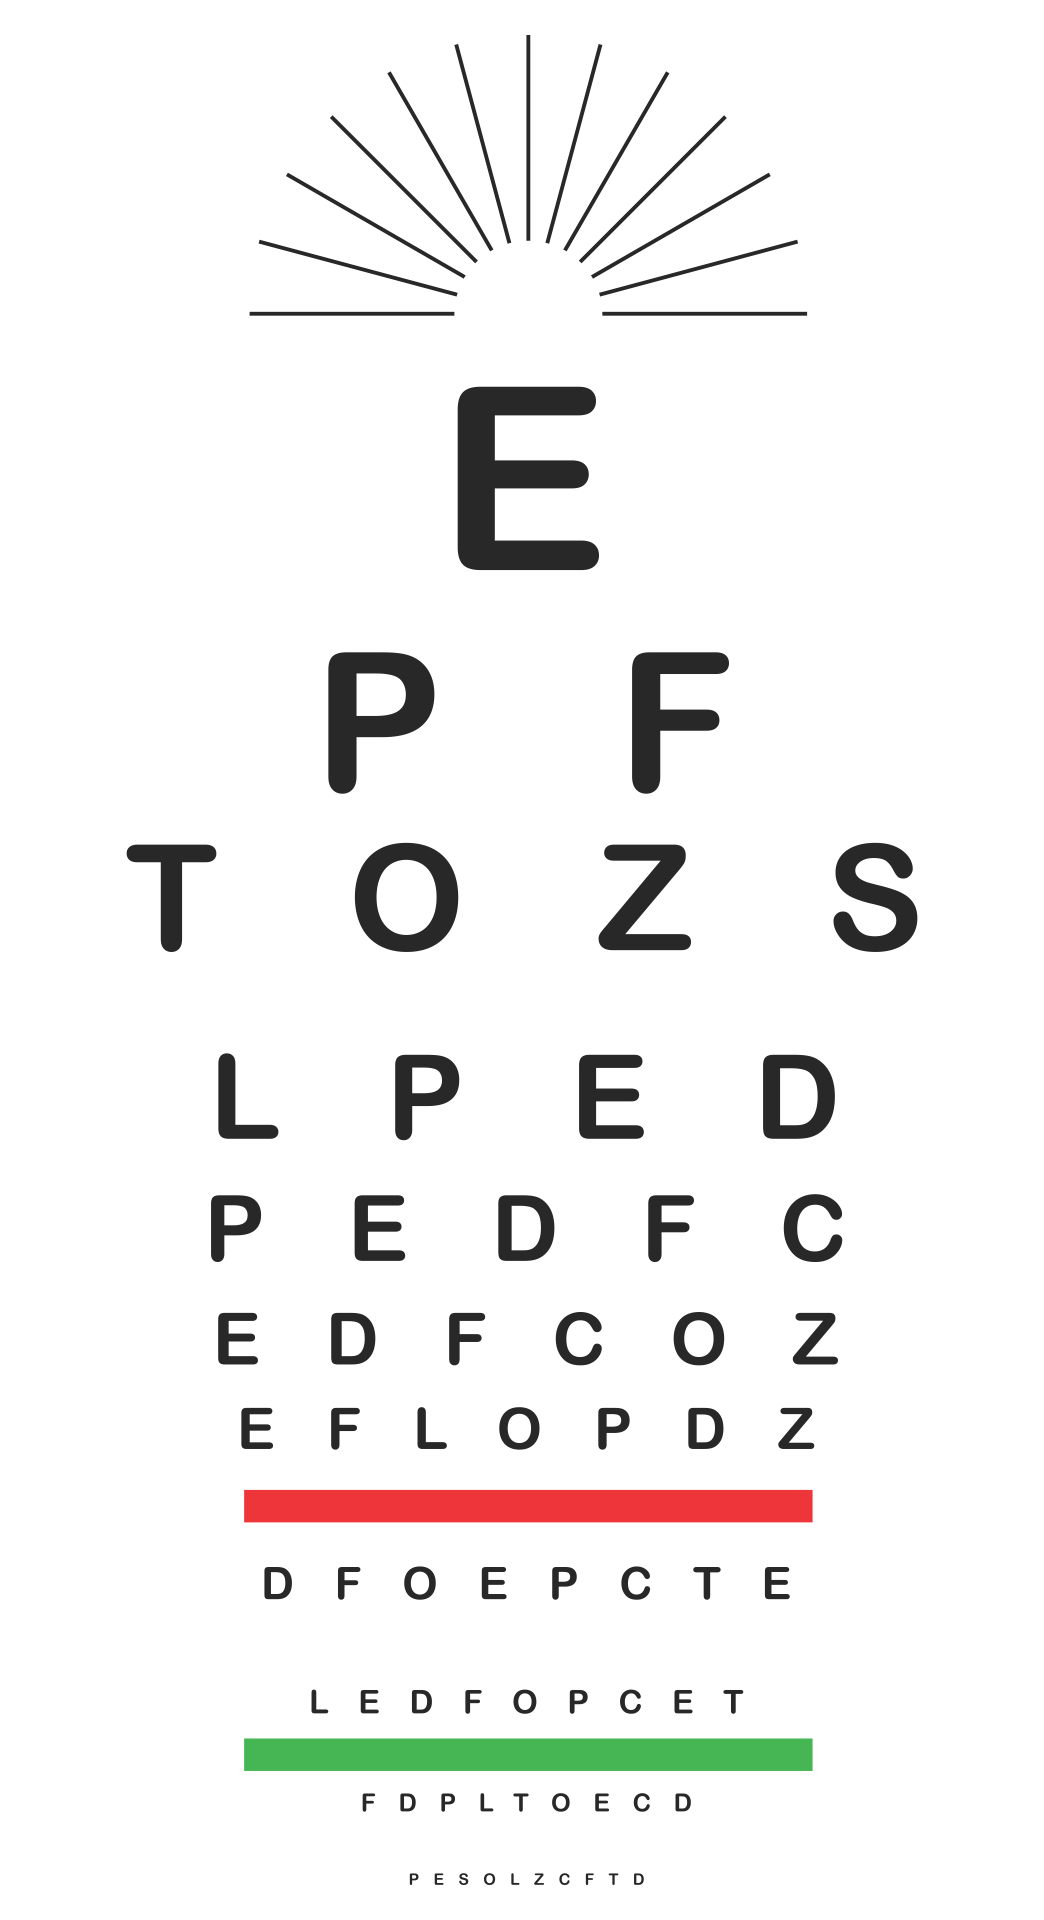 Free Printable Eye Charts Full Size - Image to u